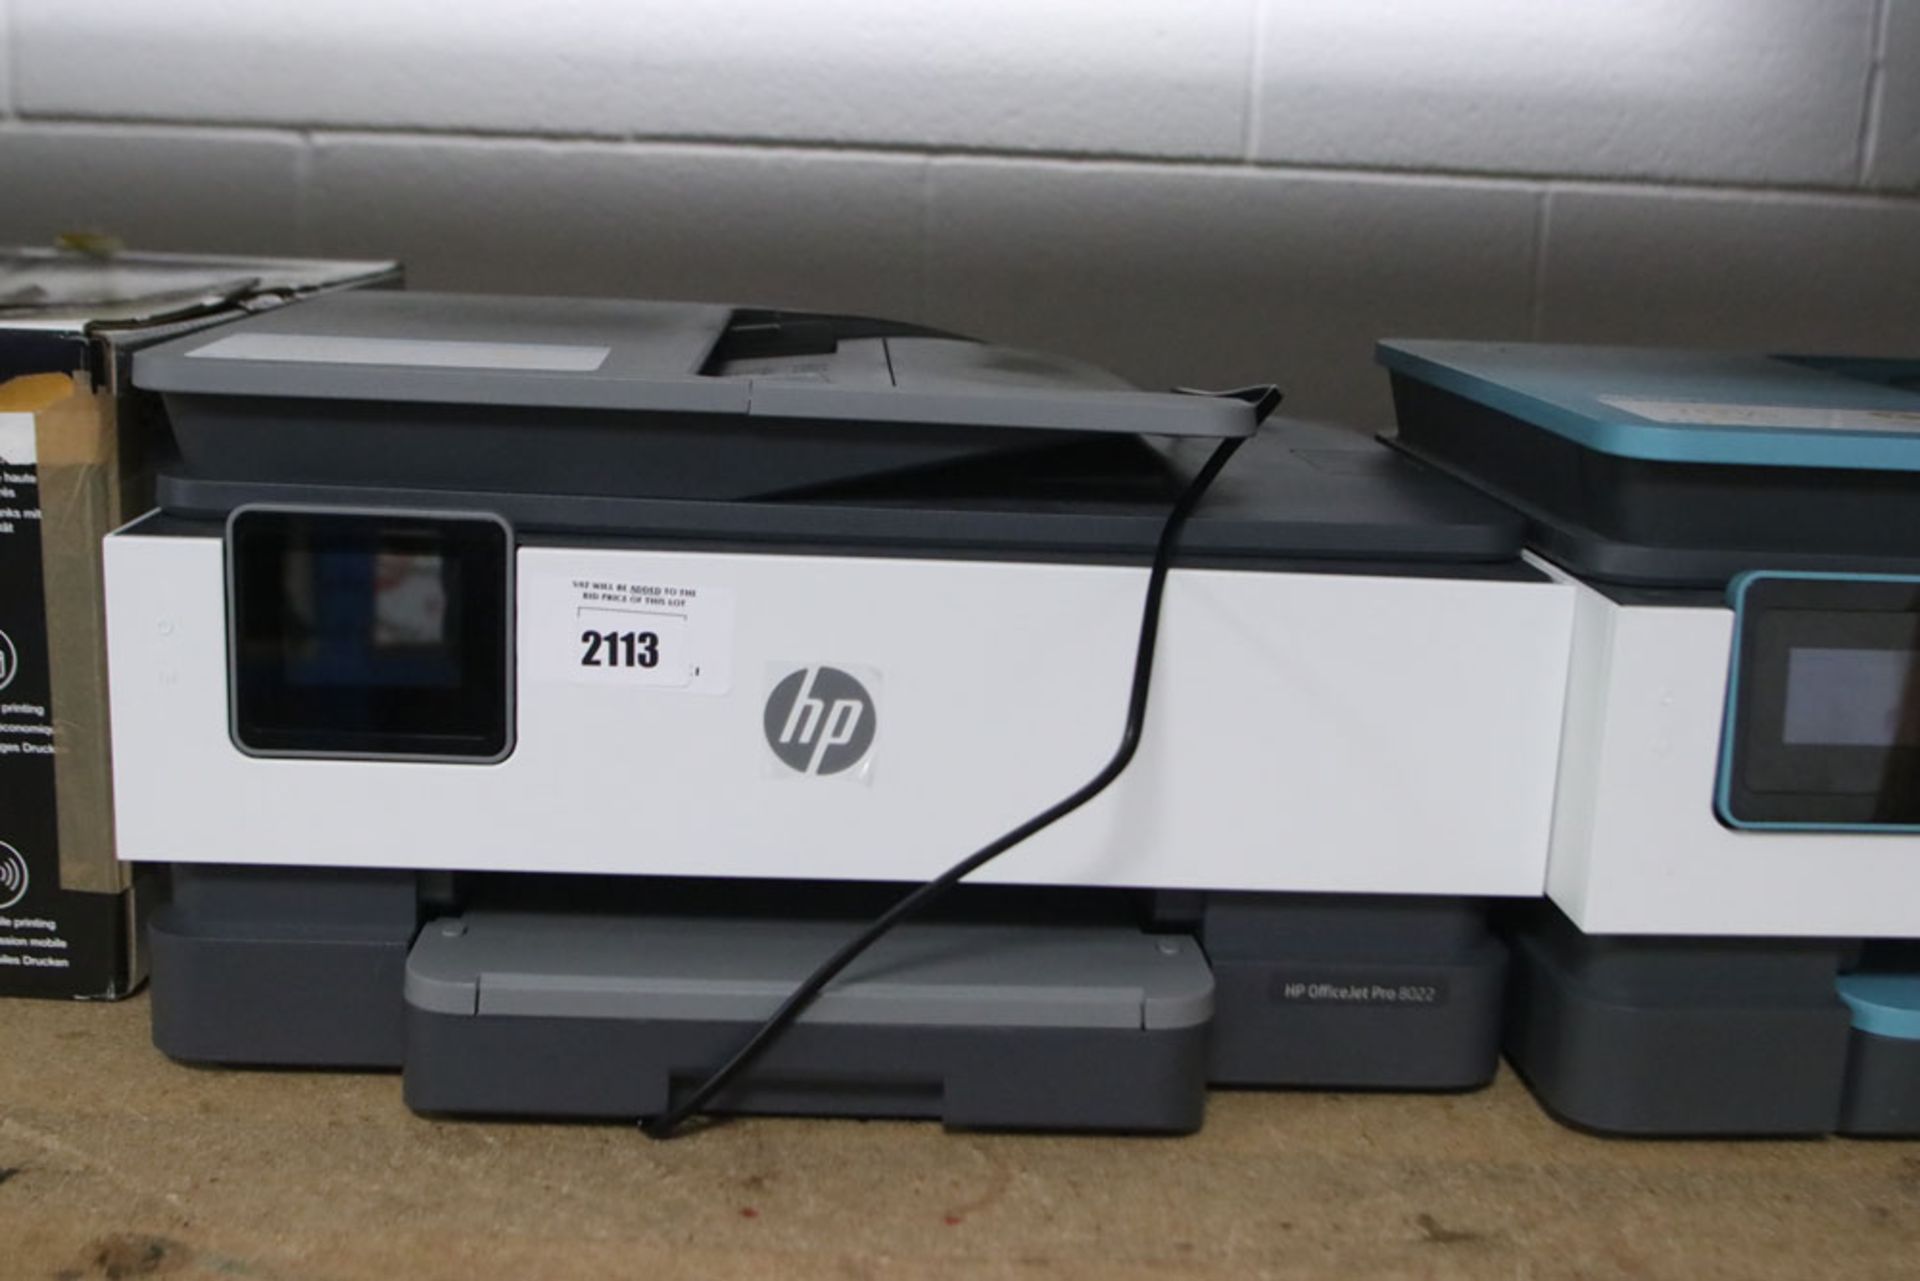 HP OfficeJet Pro 8022 Printer